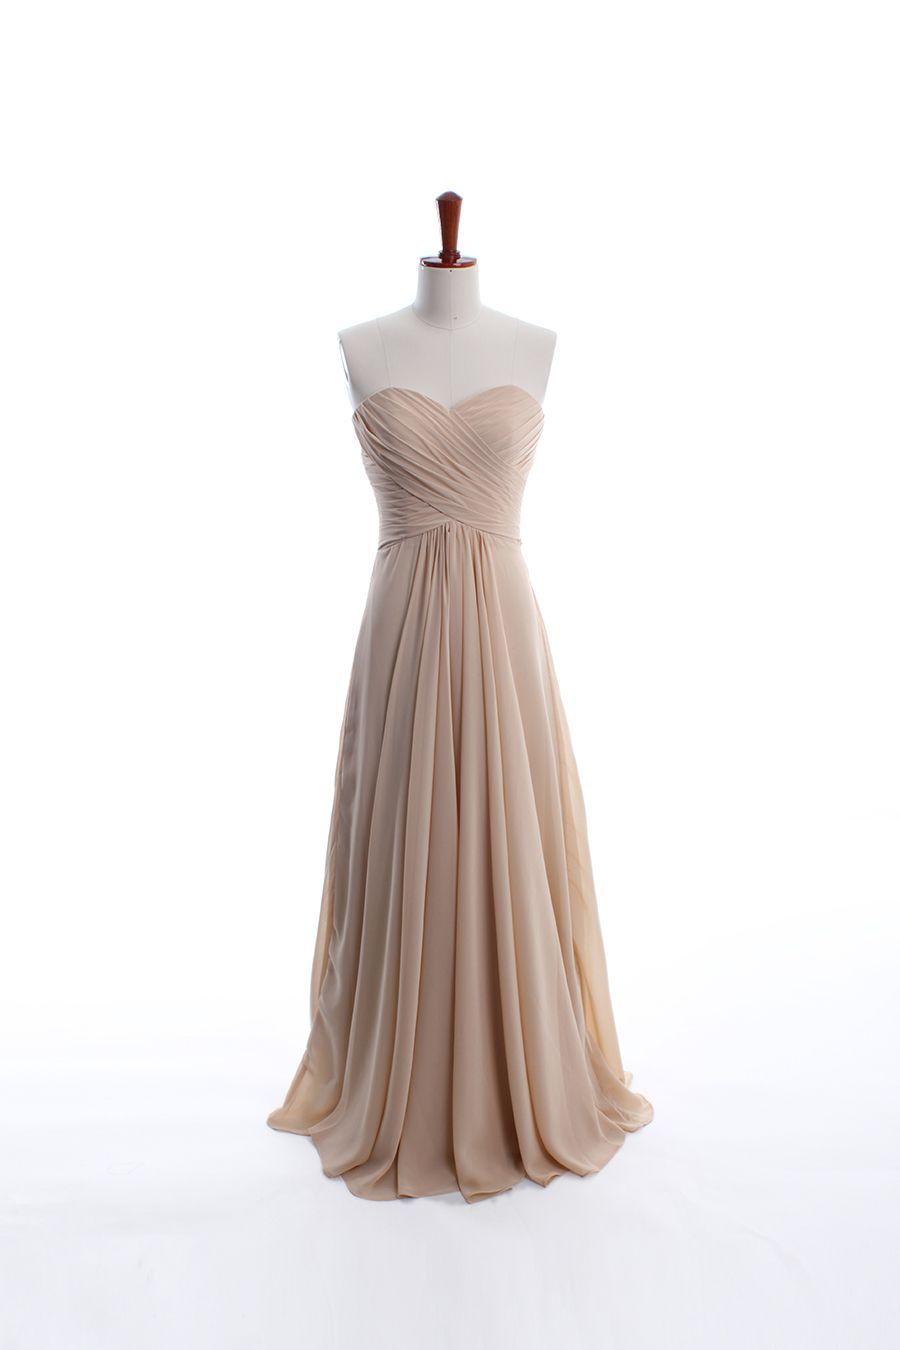 Fashionable A-line empire waist chiffon dress for bridesmaid